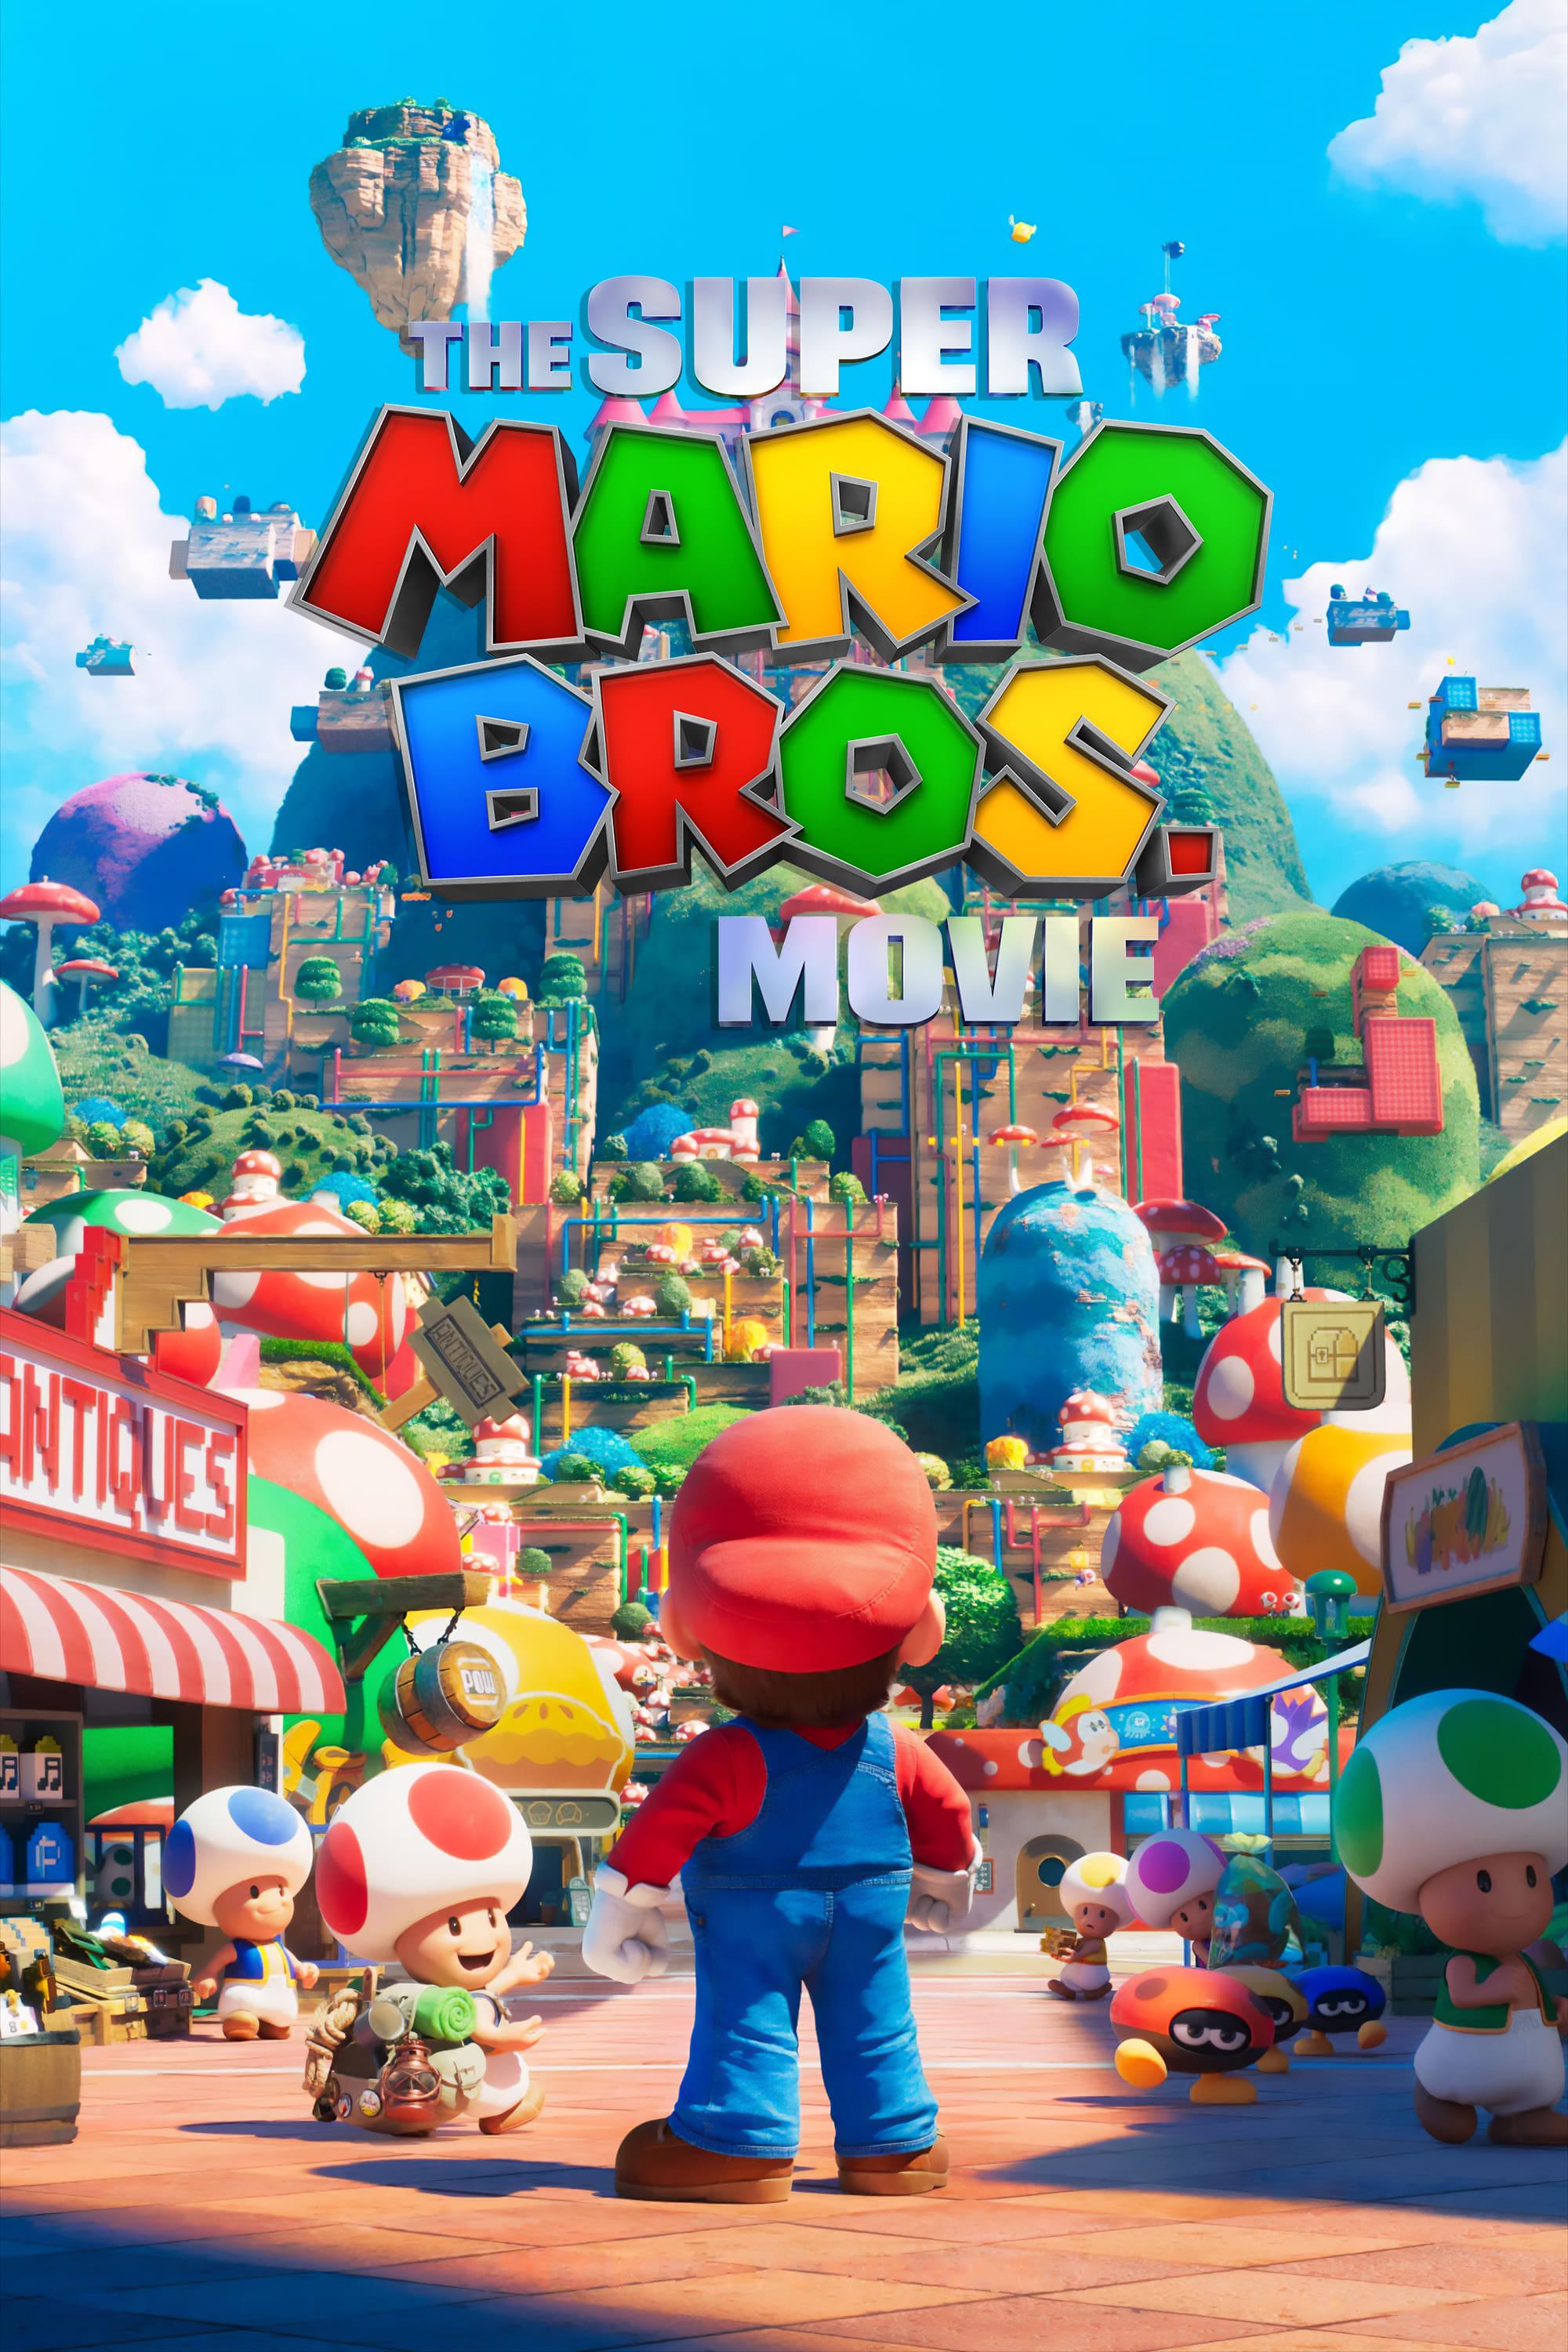 The Super Mario Bros. Movie poster